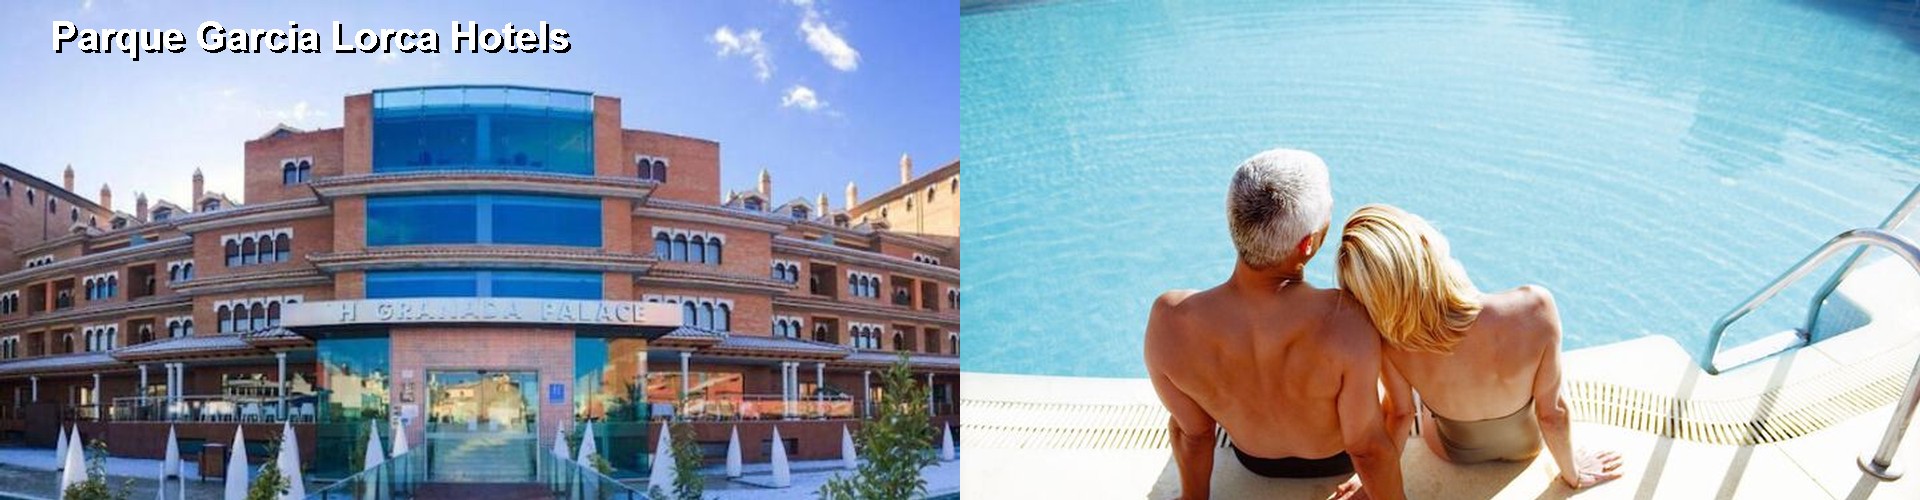 5 Best Hotels near Parque Garcia Lorca